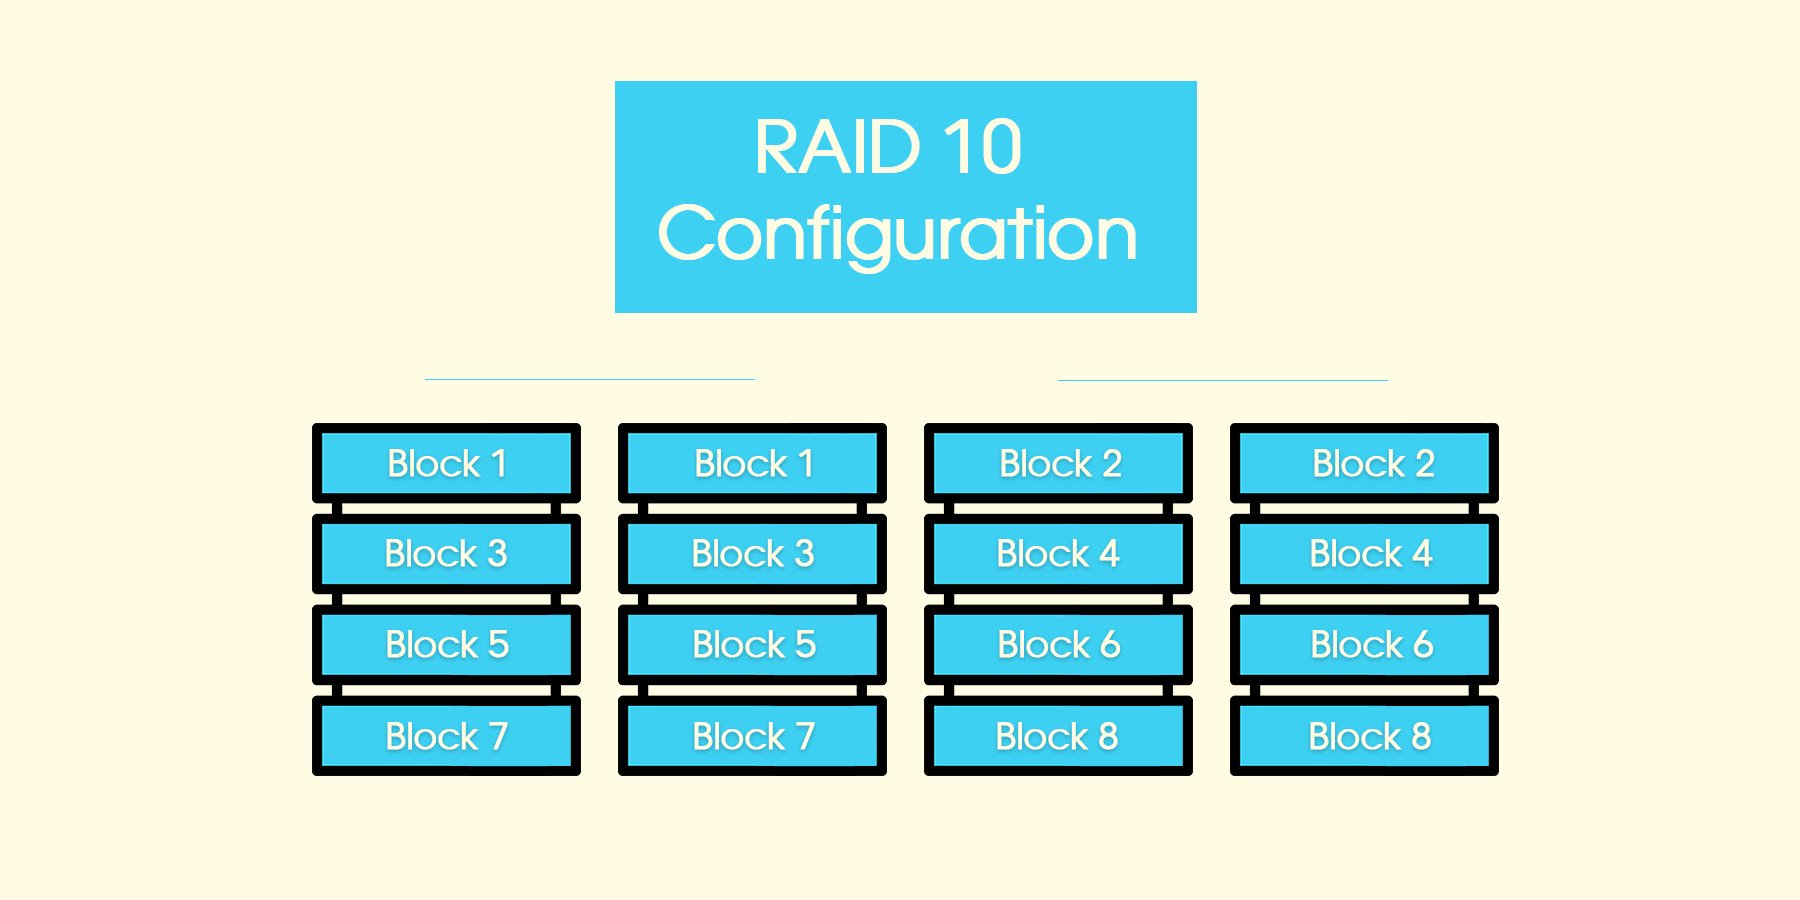 RAID 10 Configuration